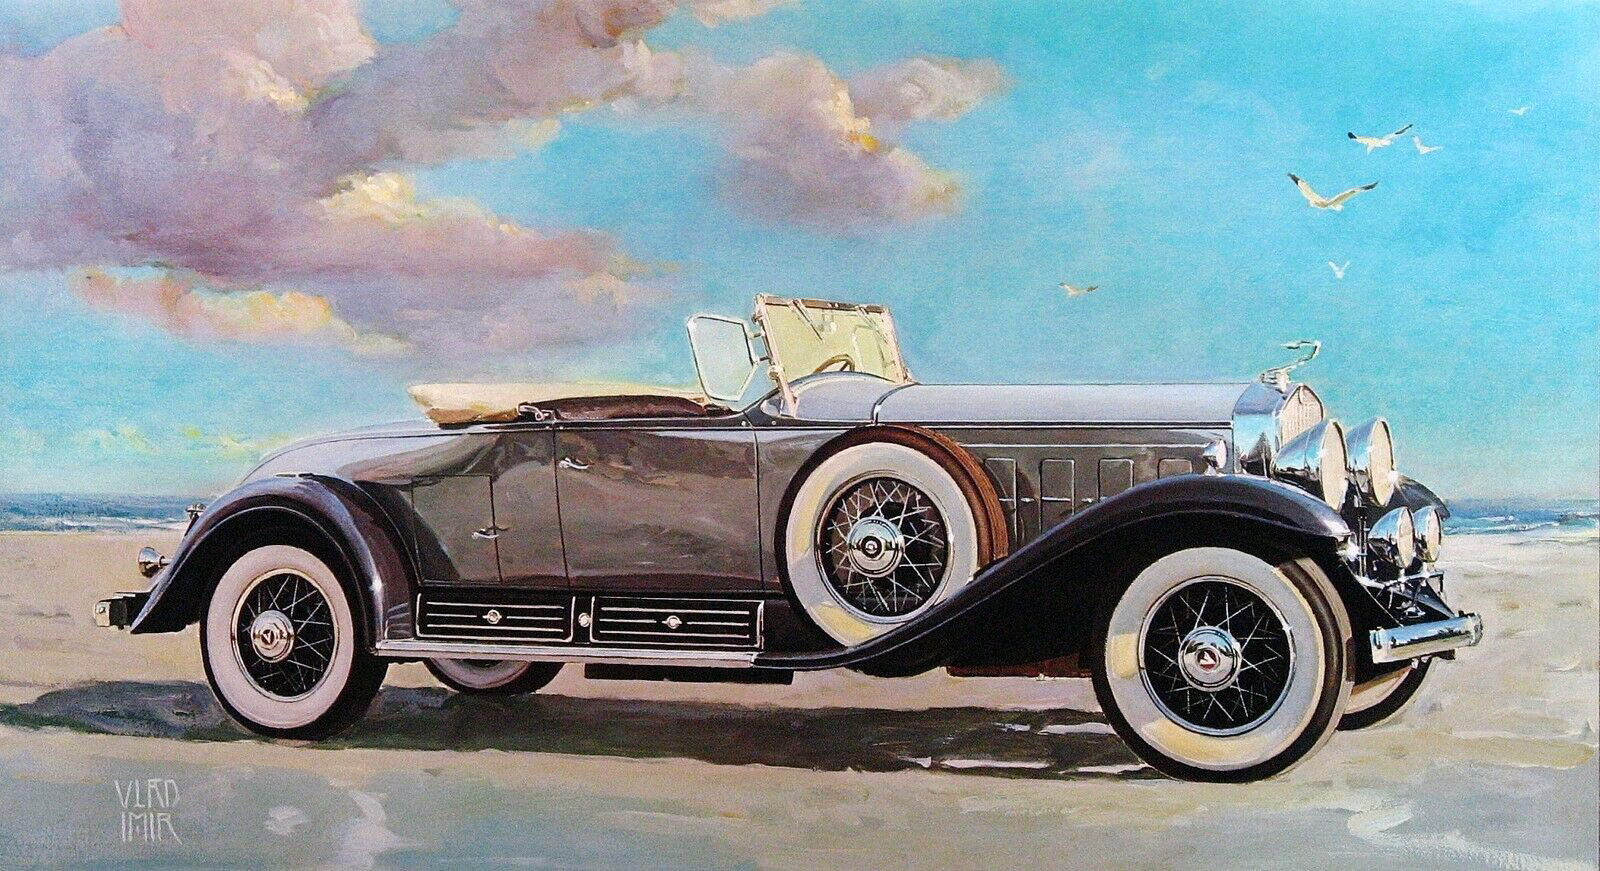 1930 Cadillac V-16 Convertible (Fleetwood): Illustrated by Vladimir Kordic